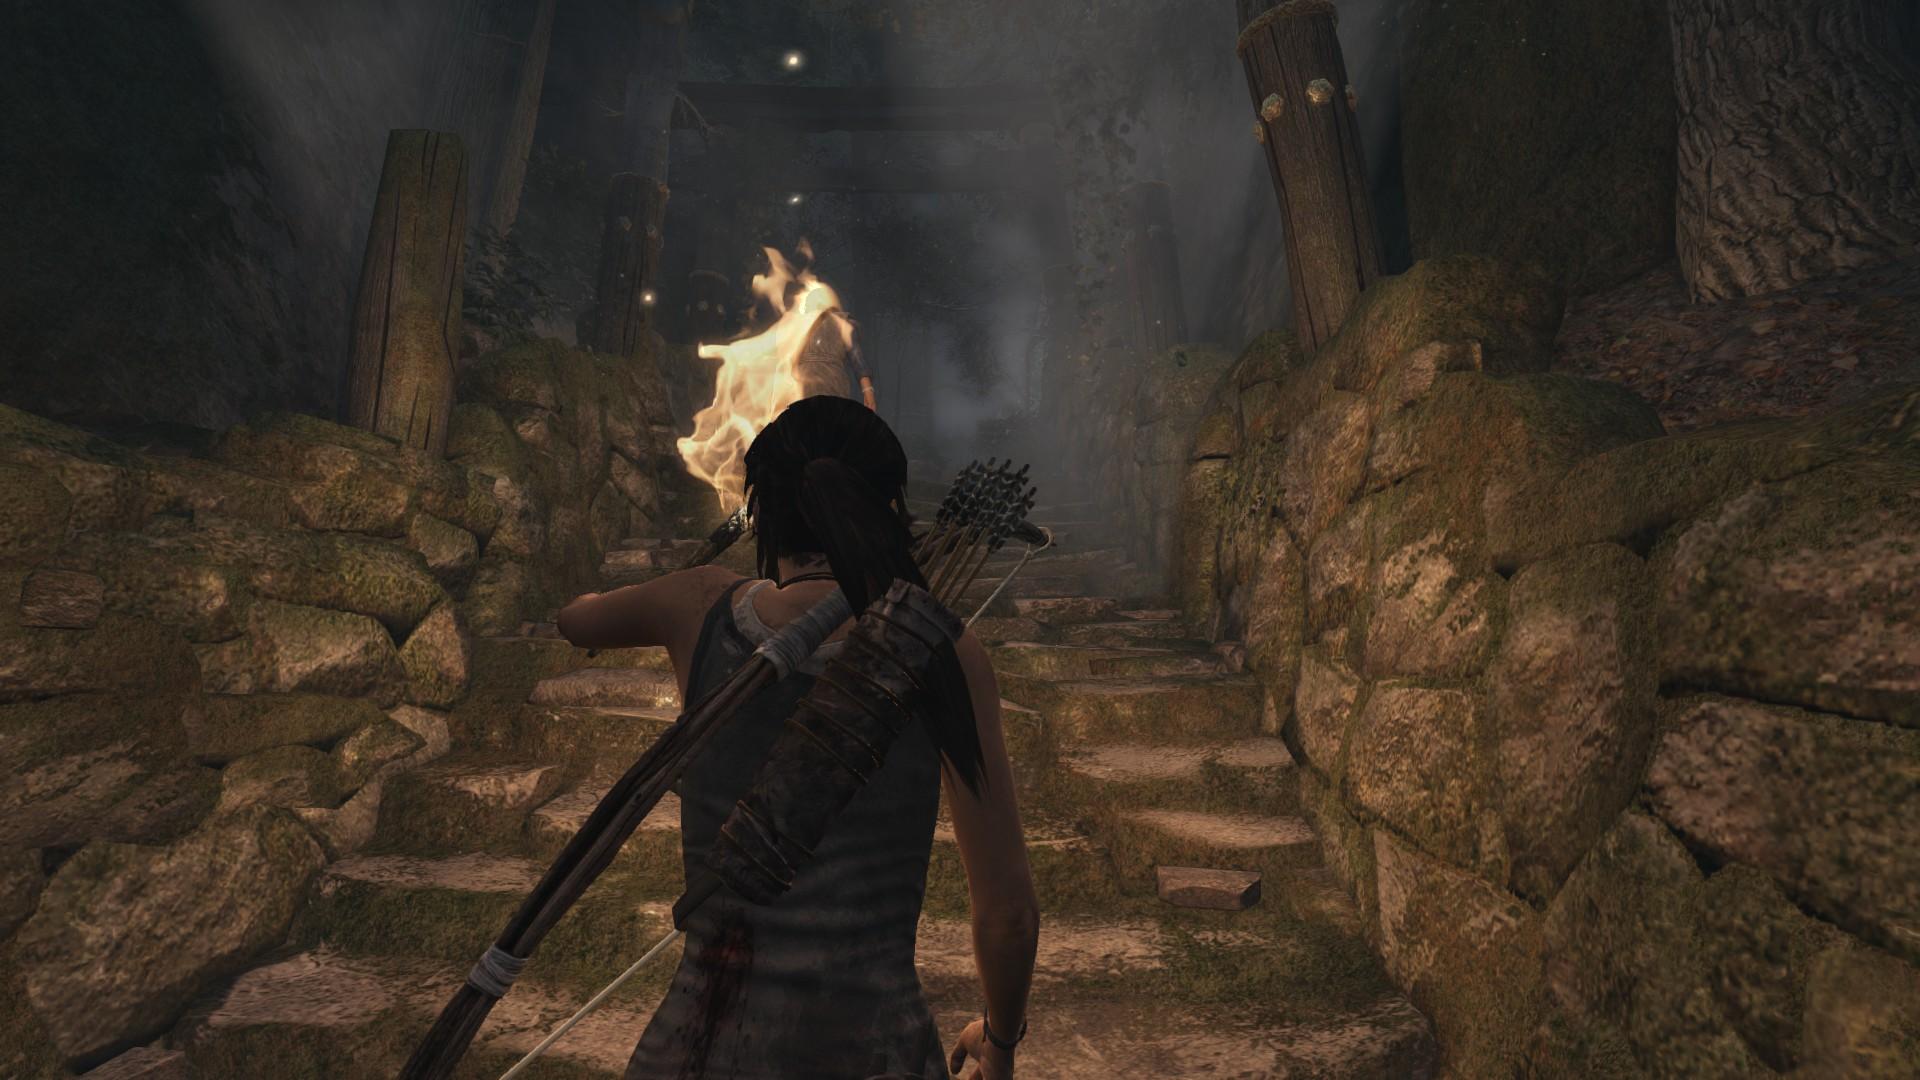 Скриншот *Tomb Raider - Definitive Edition [PS4] 5.05 / 6.72 / 7.02 [EUR] (2013) [Русский] (v1.01)*